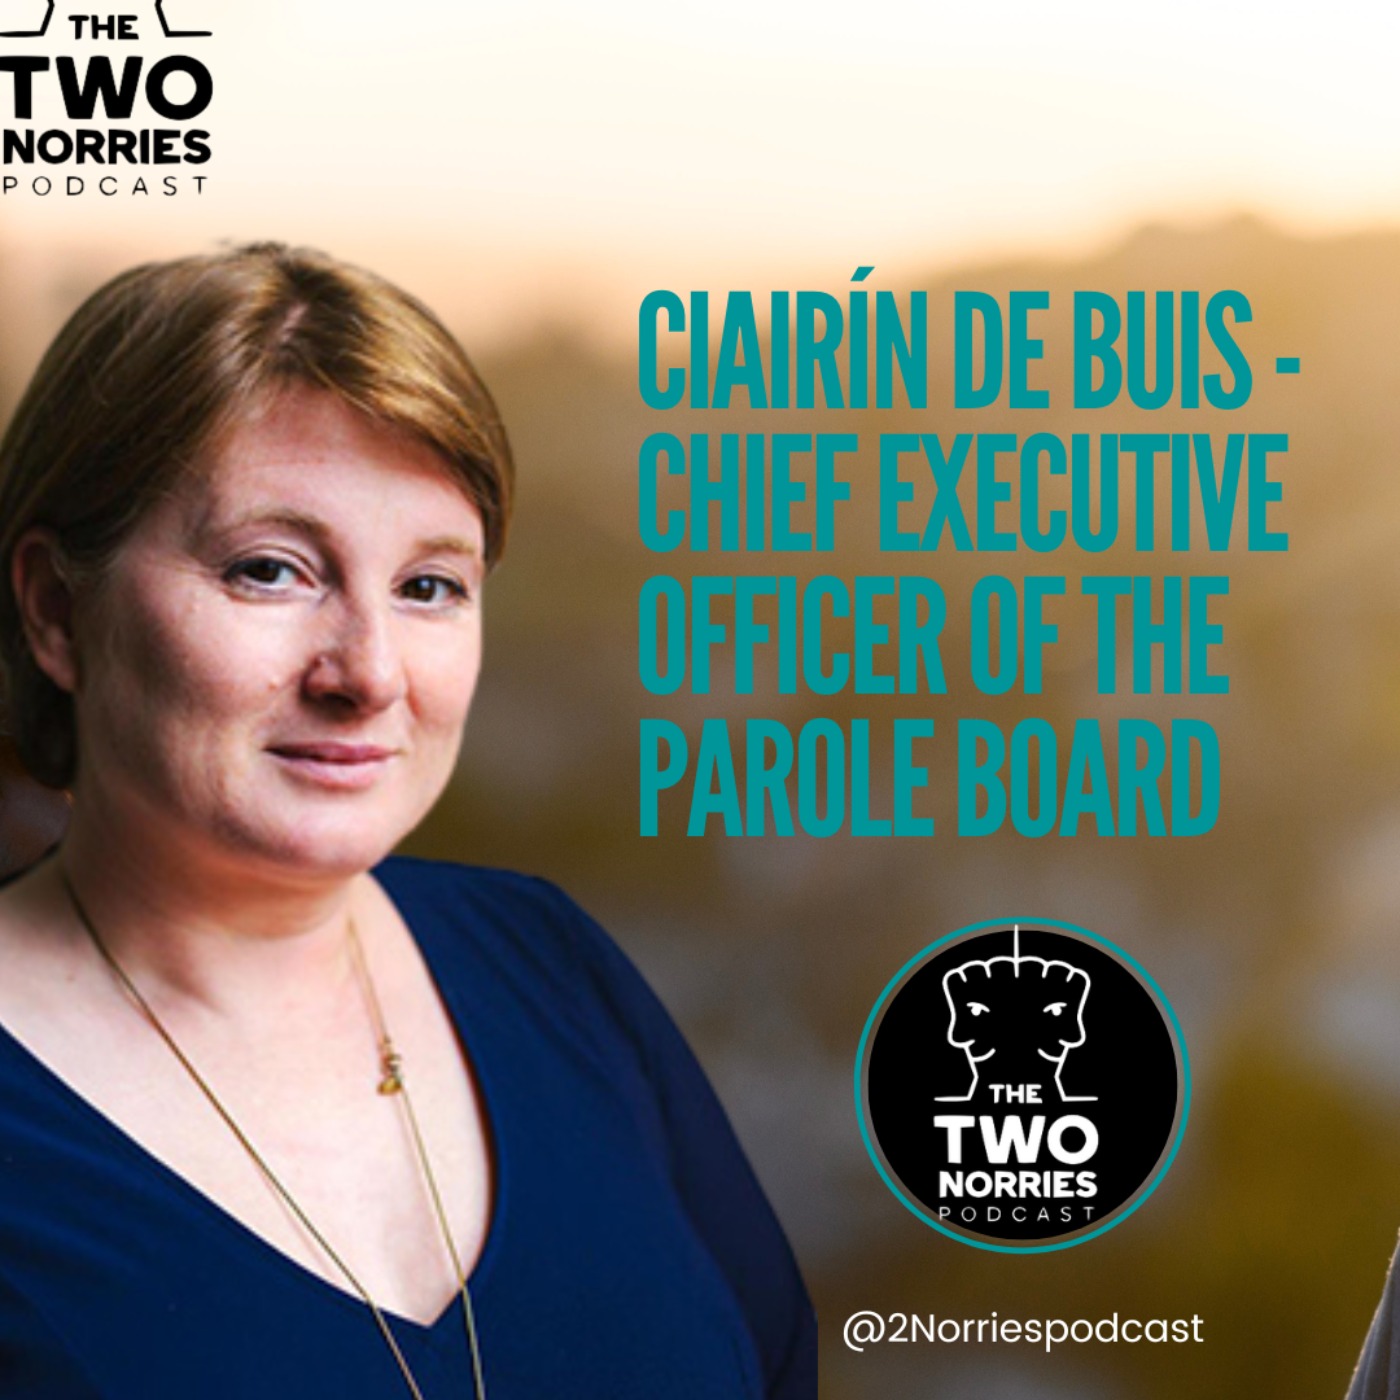 #187 Ciairín de Buis: The Chief Executive Officer of The Parole Board